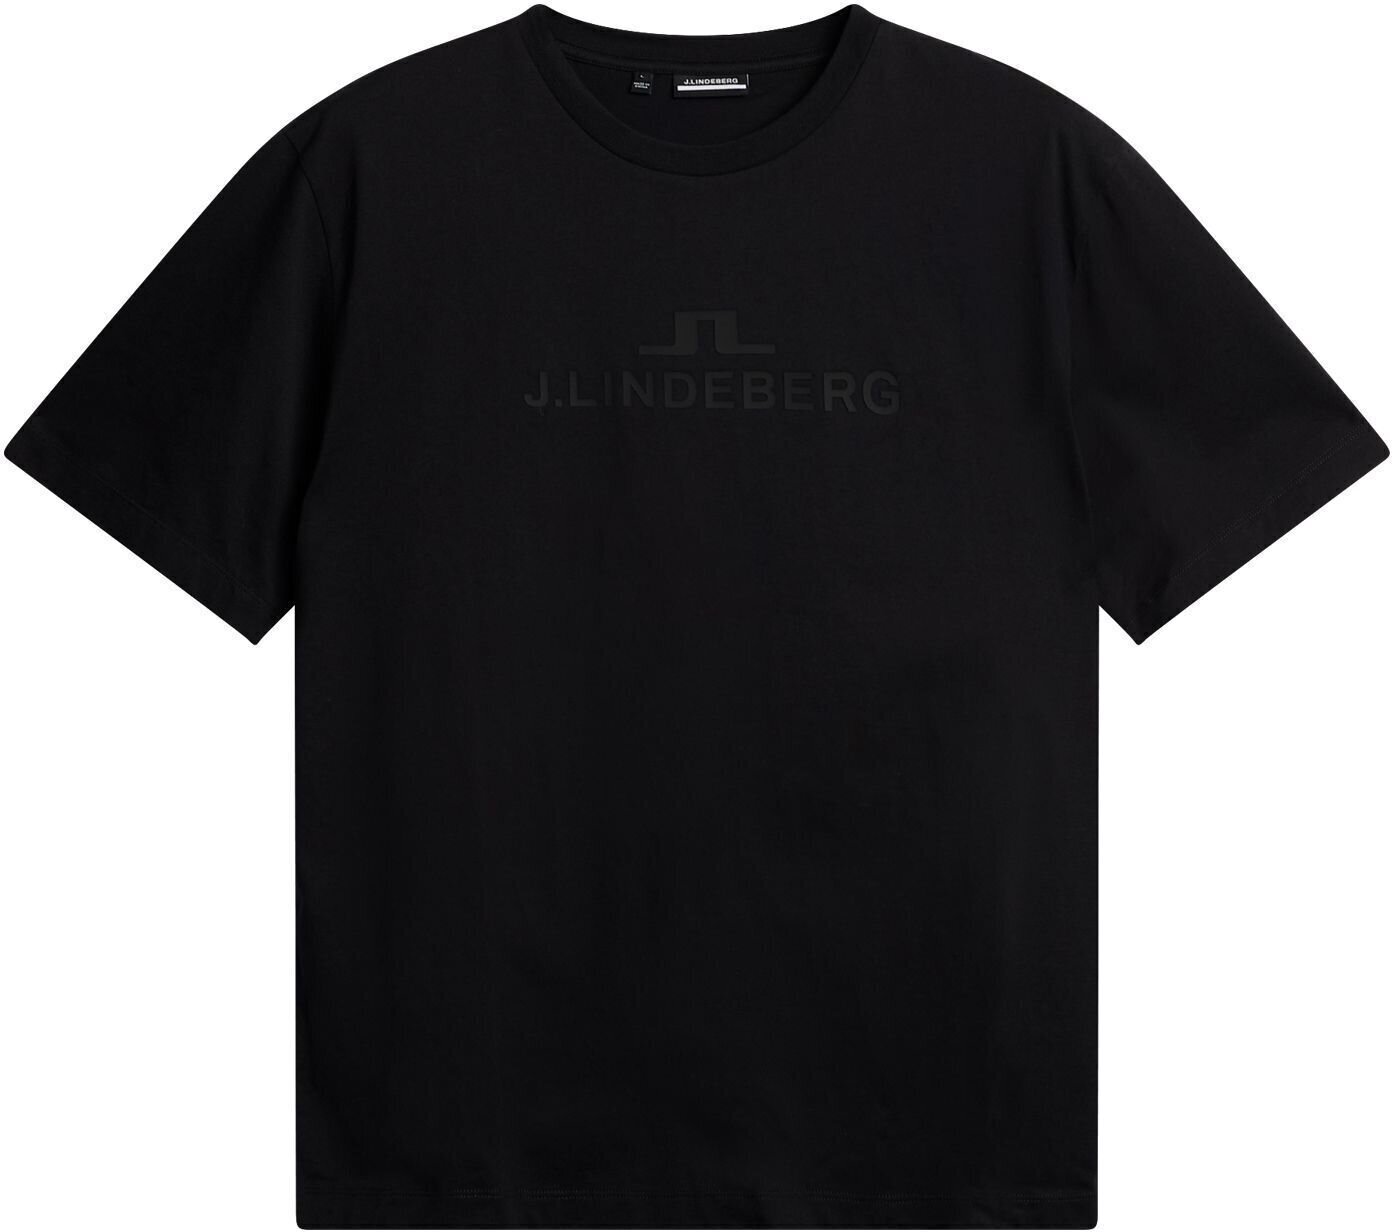 Polo košile J.Lindeberg Alpha T-shirt Black XL